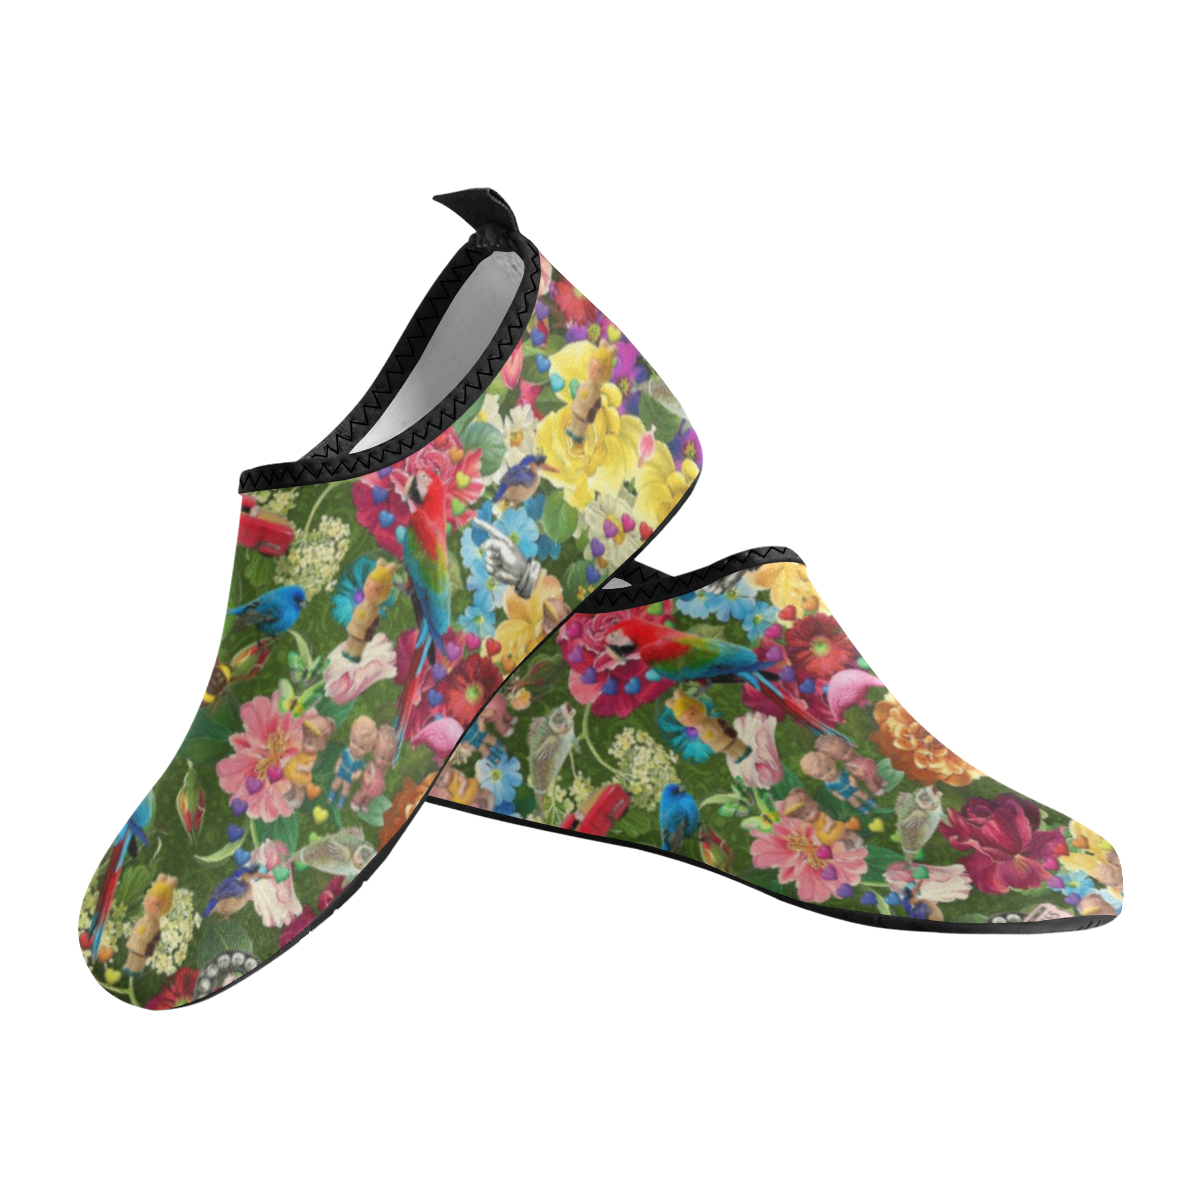 Is it Springtime Yet? Women's Slip-On Water Shoes (Model 056)